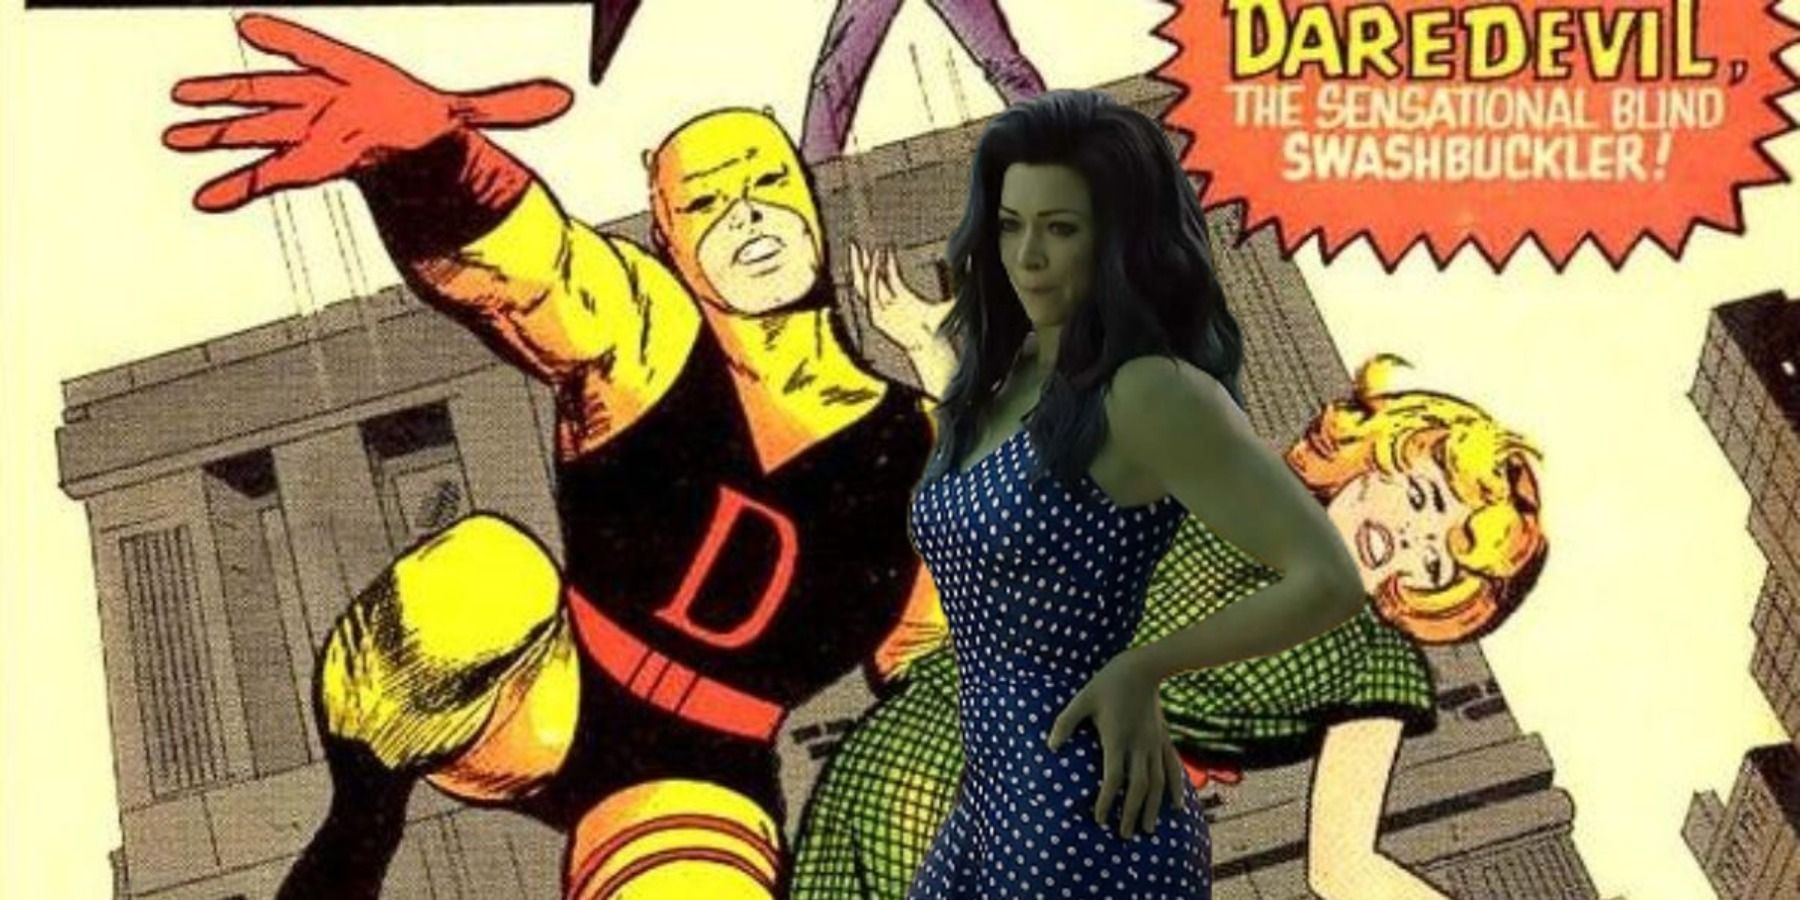 She-Hulk and Daredevil yellow costume from comics